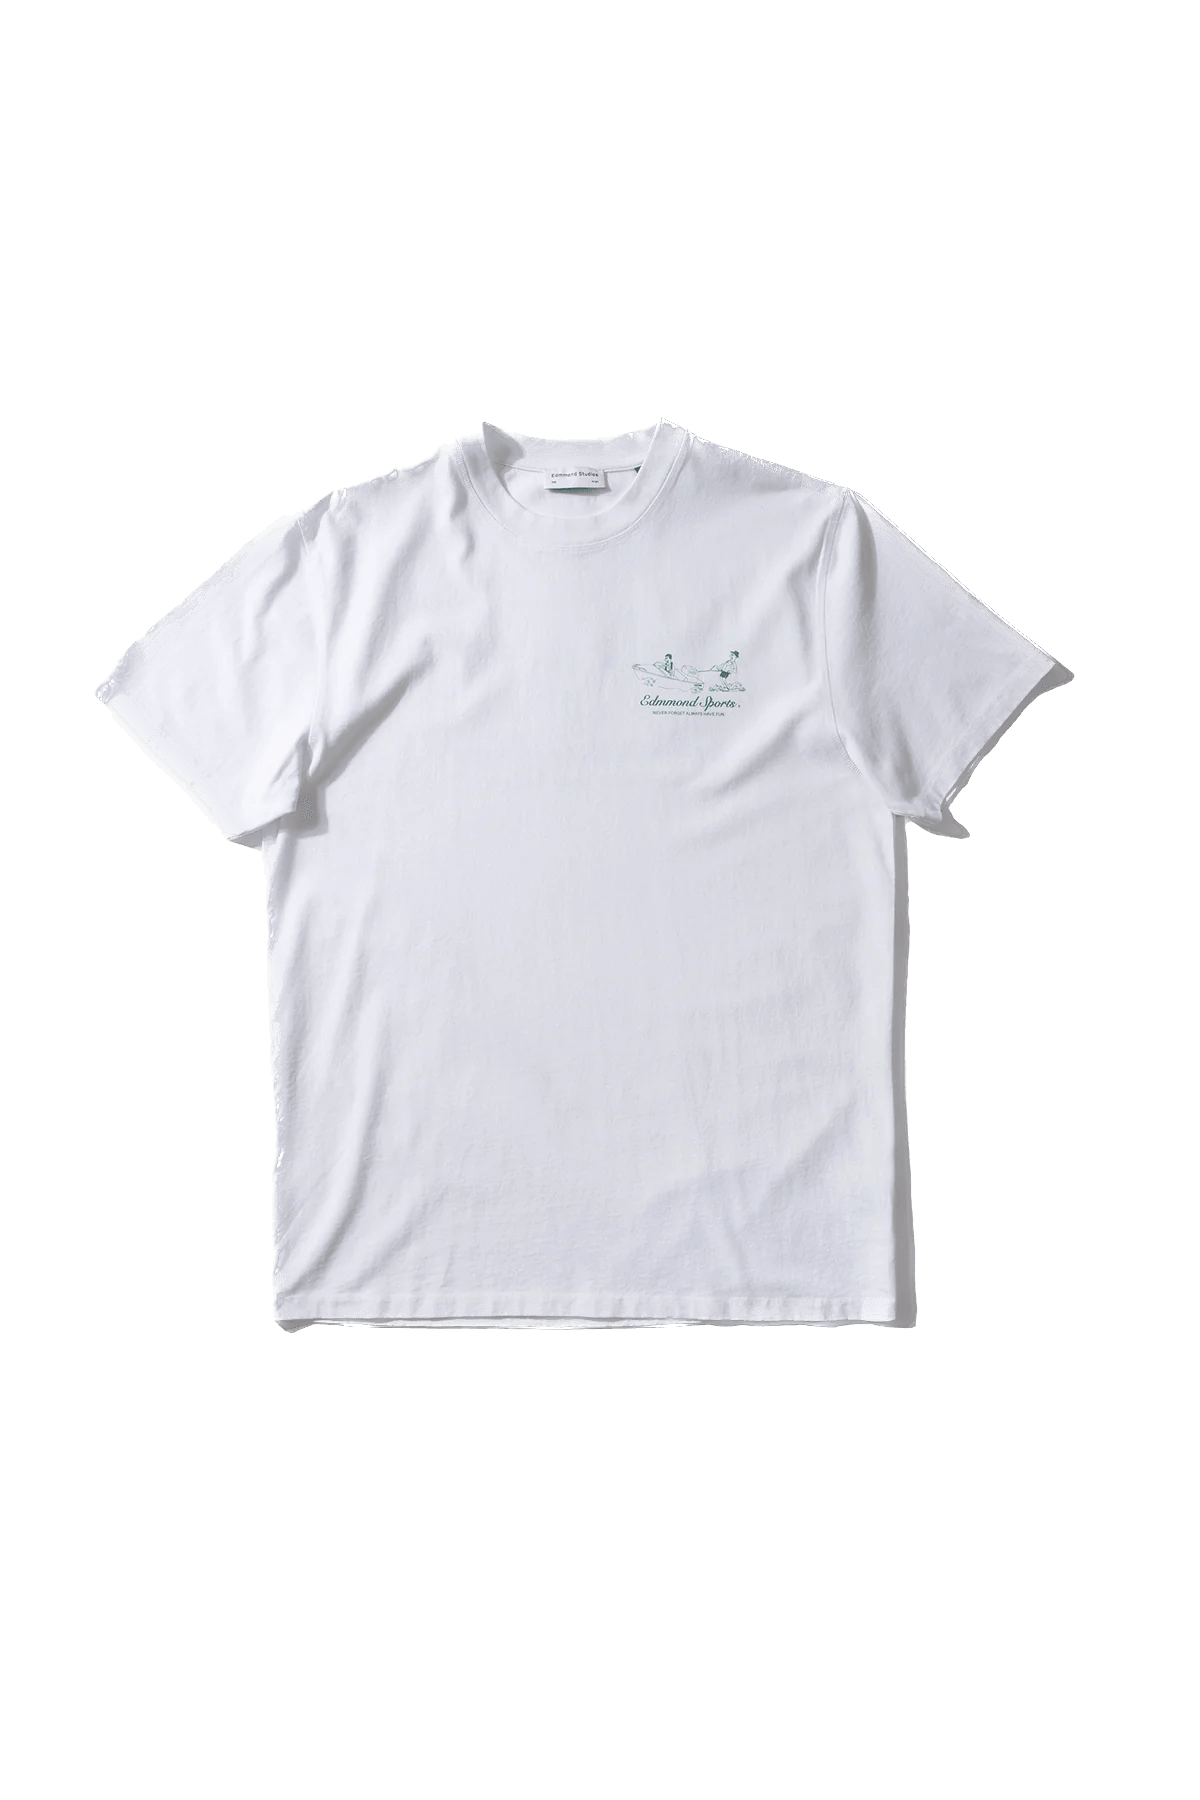 Camiseta Edmmond Studios Calypso II Plain White - ECRU